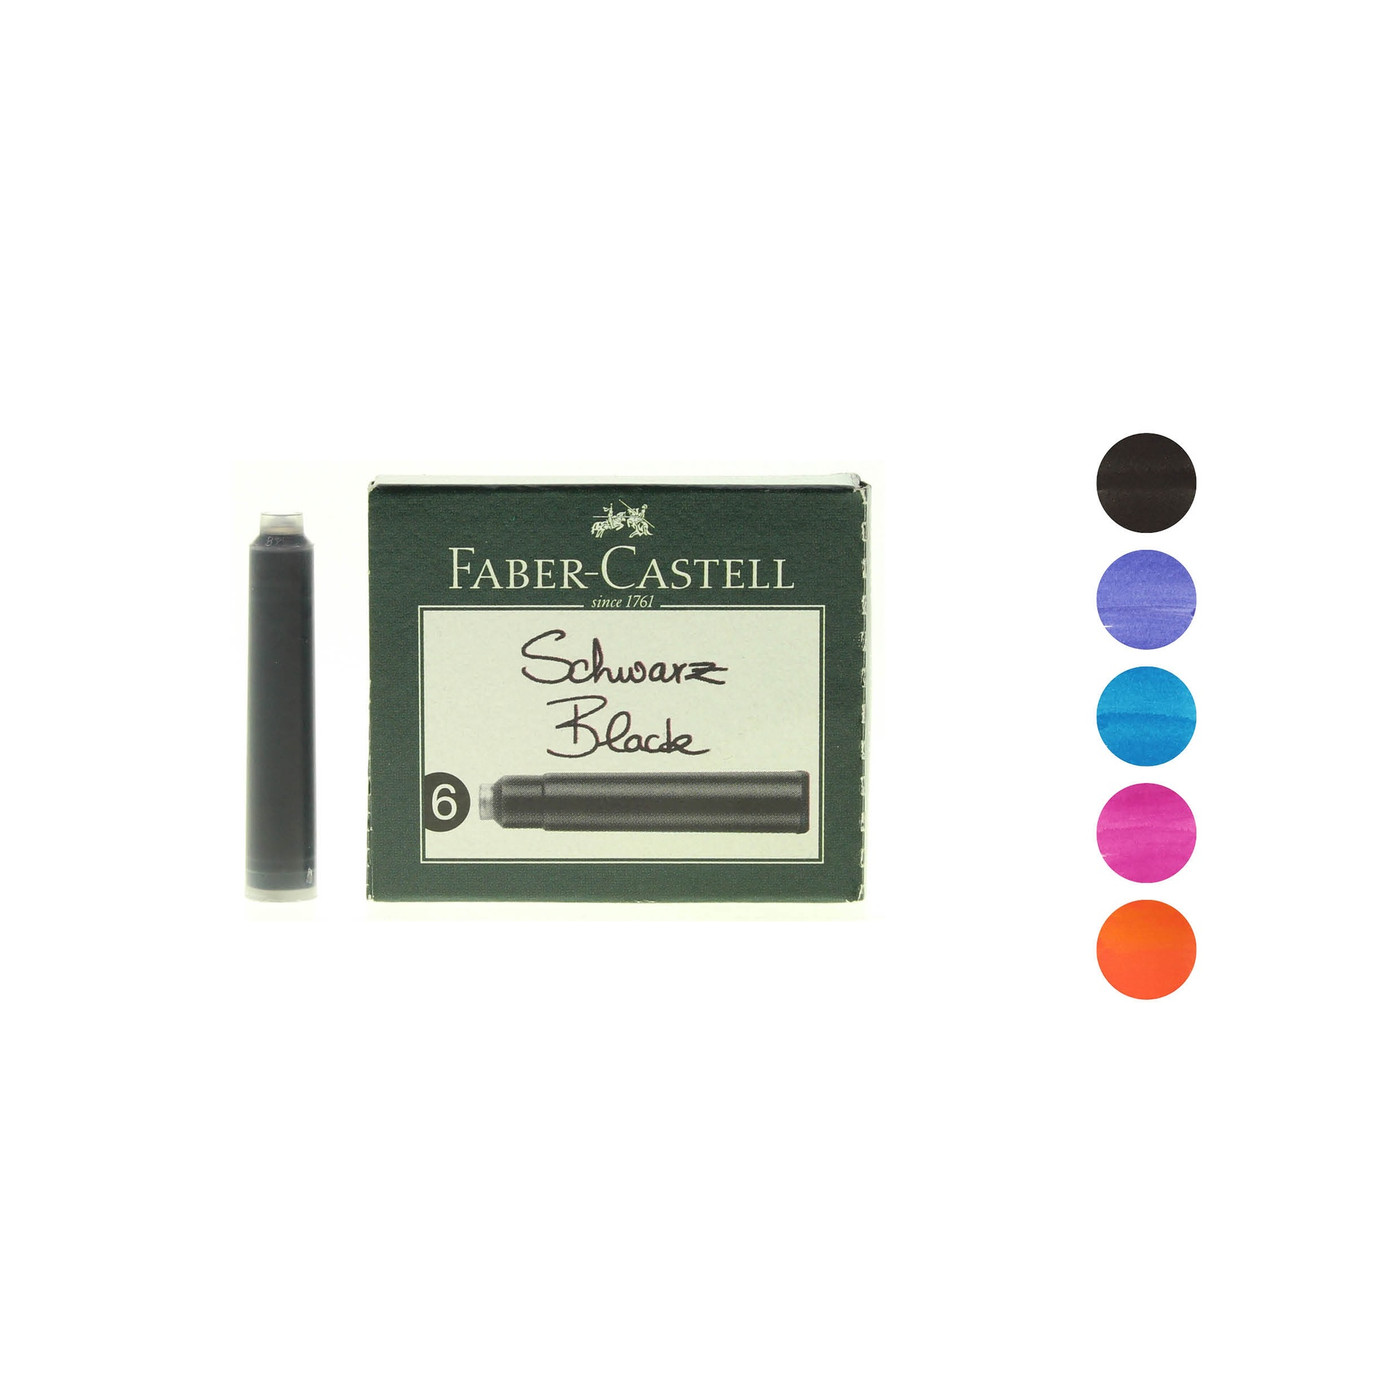 Faber-Castell ink cartridges